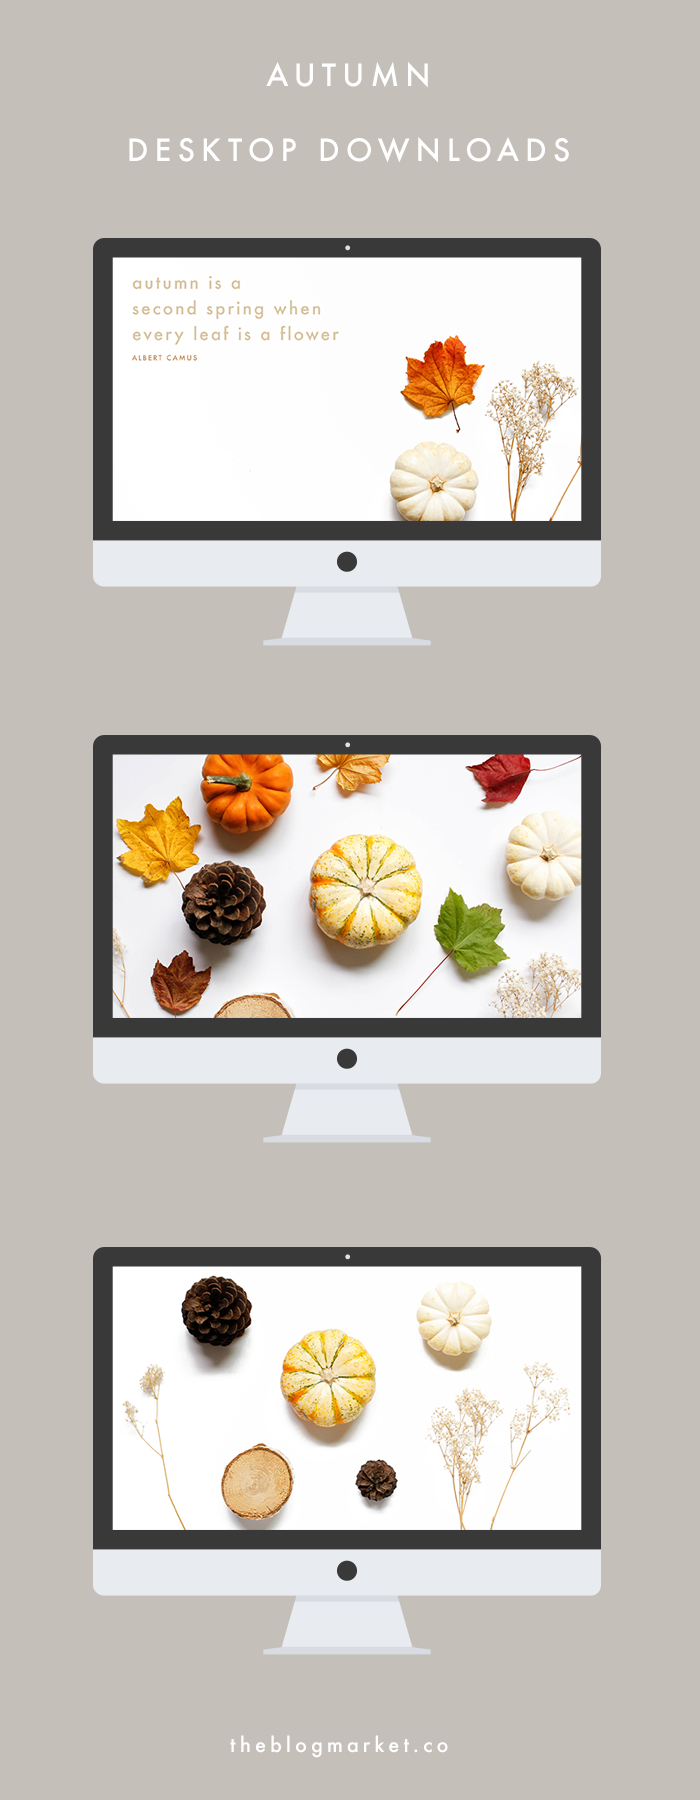 Autumn Desktop Downloads | The Blog Market